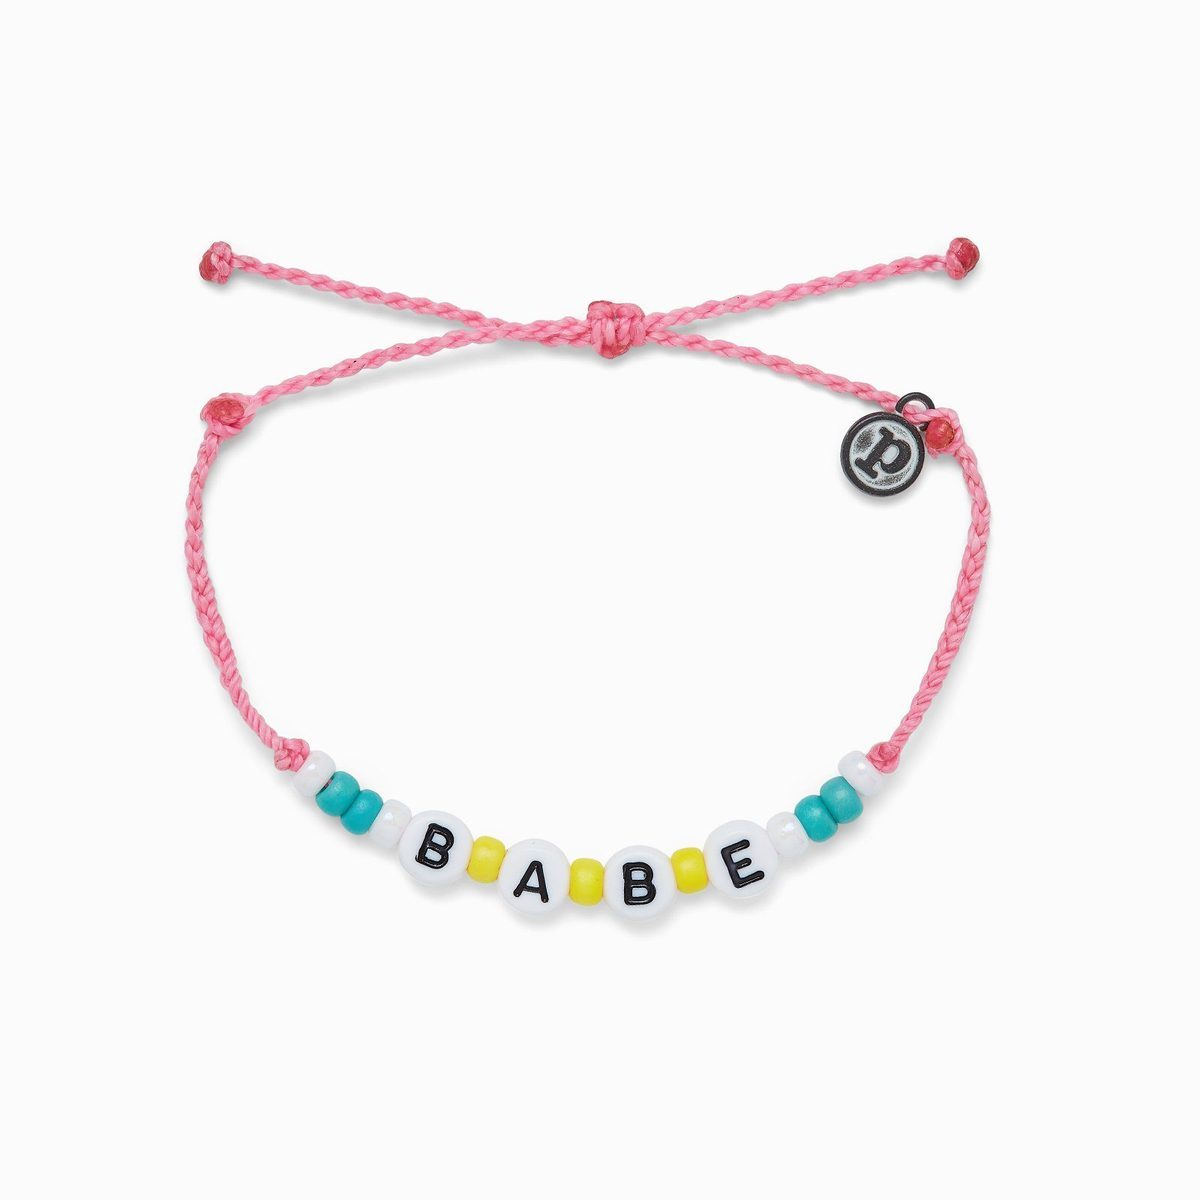 Pura Vida Babe Bead Bracelet - Just Believe Boutique